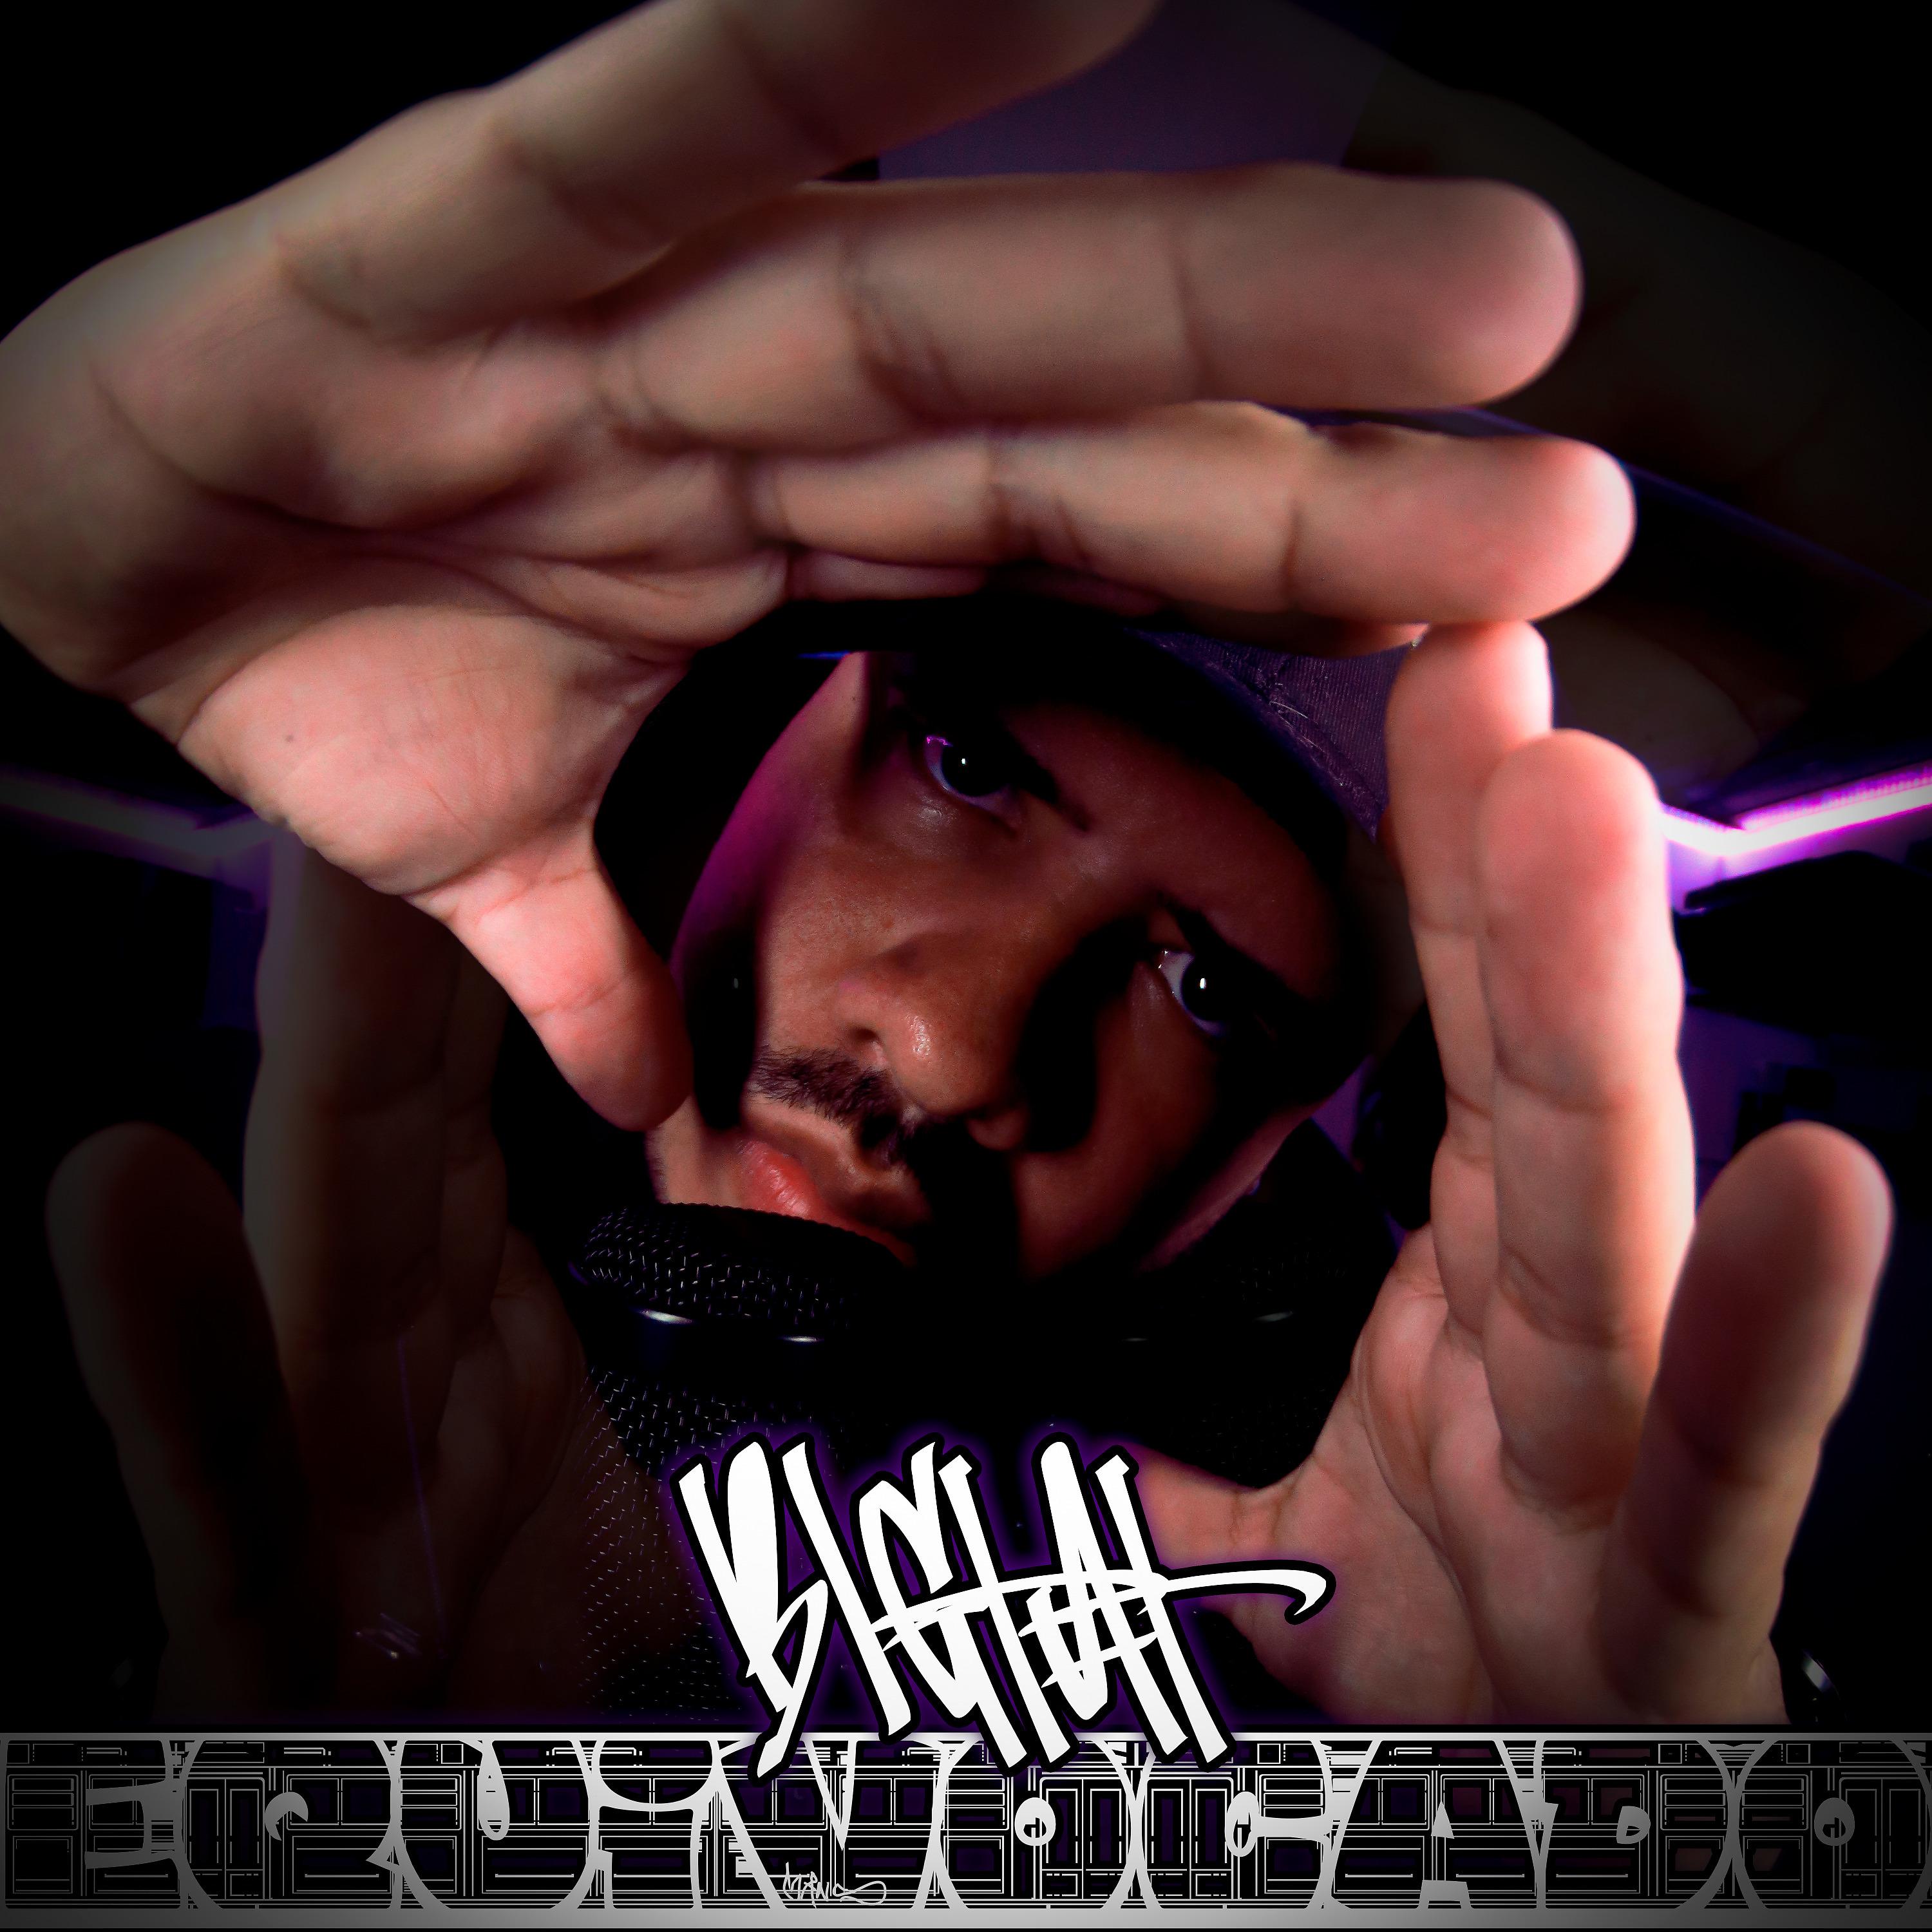 Постер альбома Equivocado